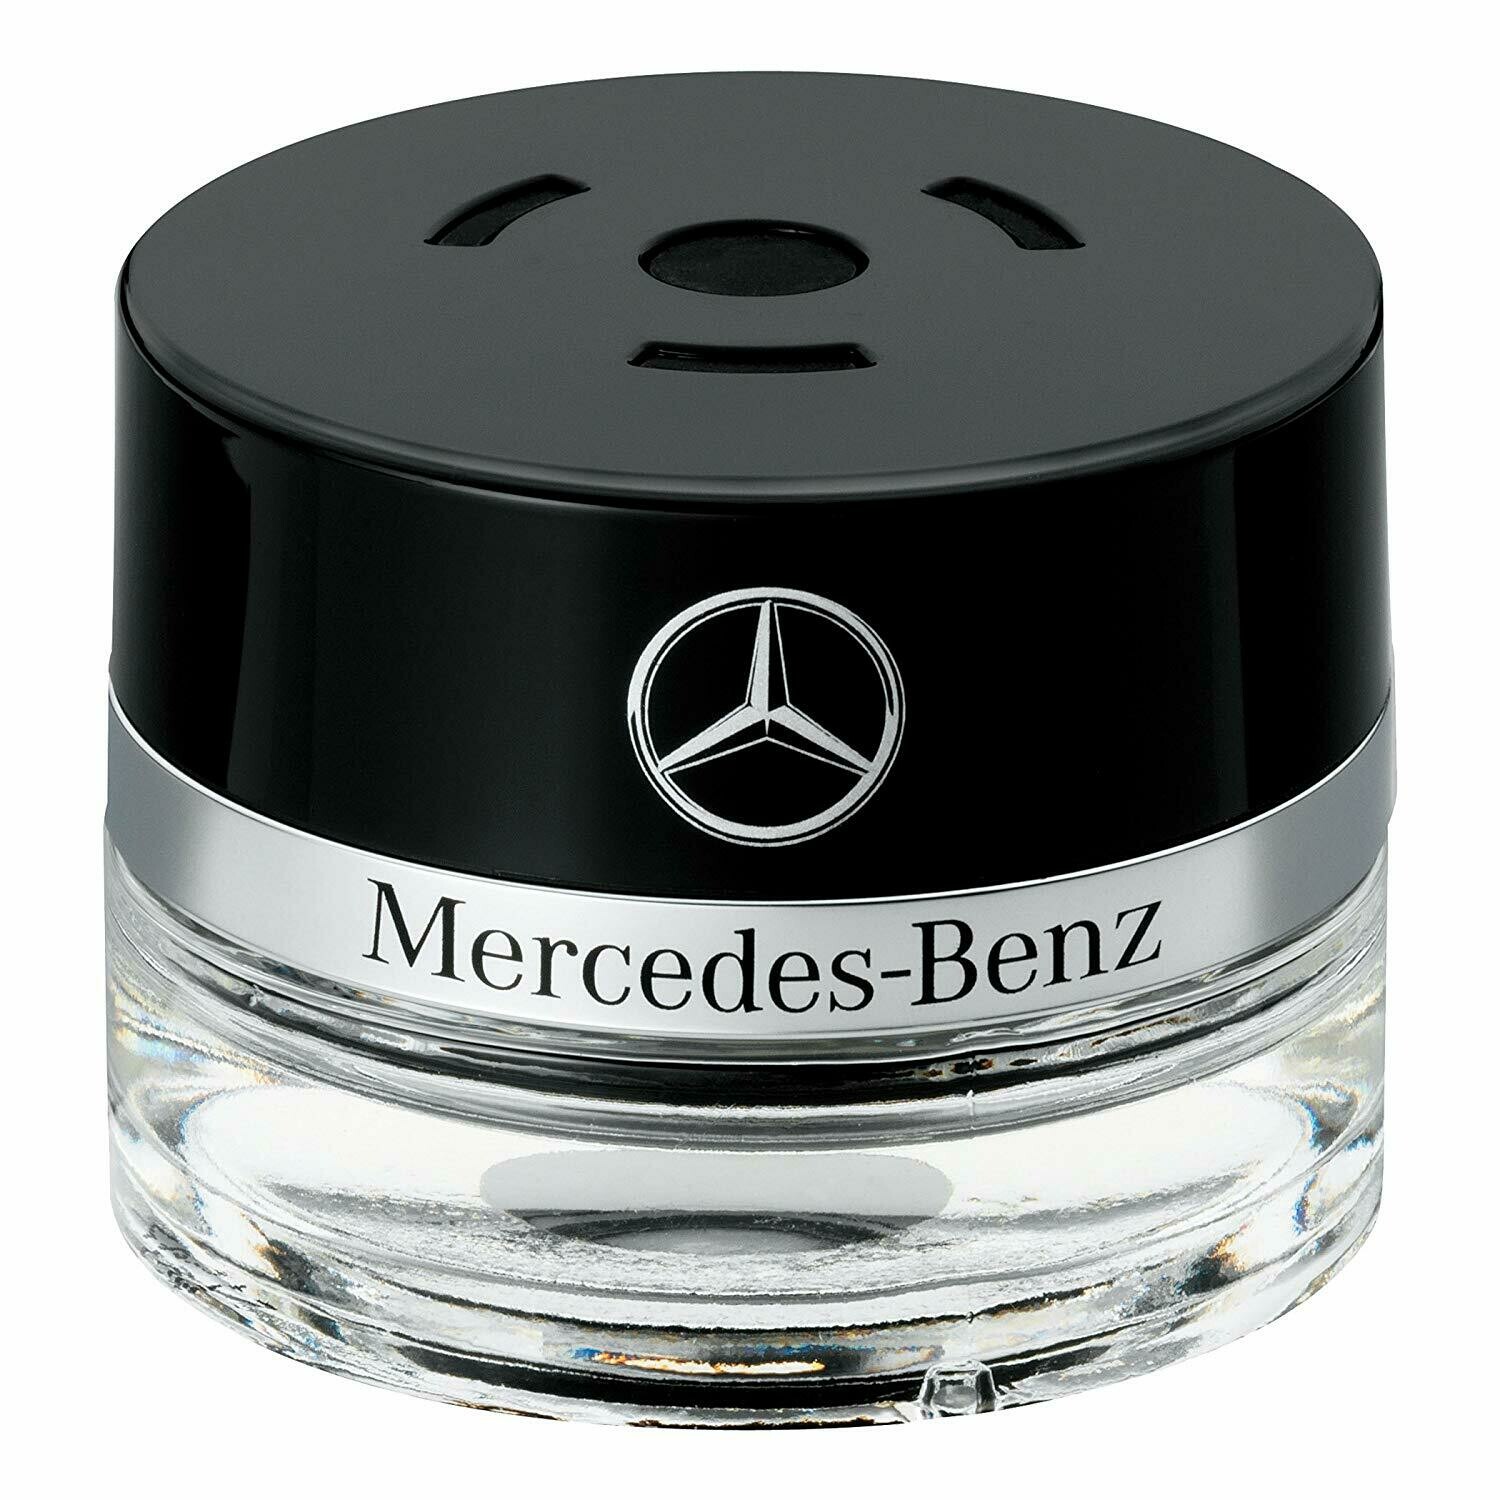 Mercedes-Benz Air Spencer Freeside Mood